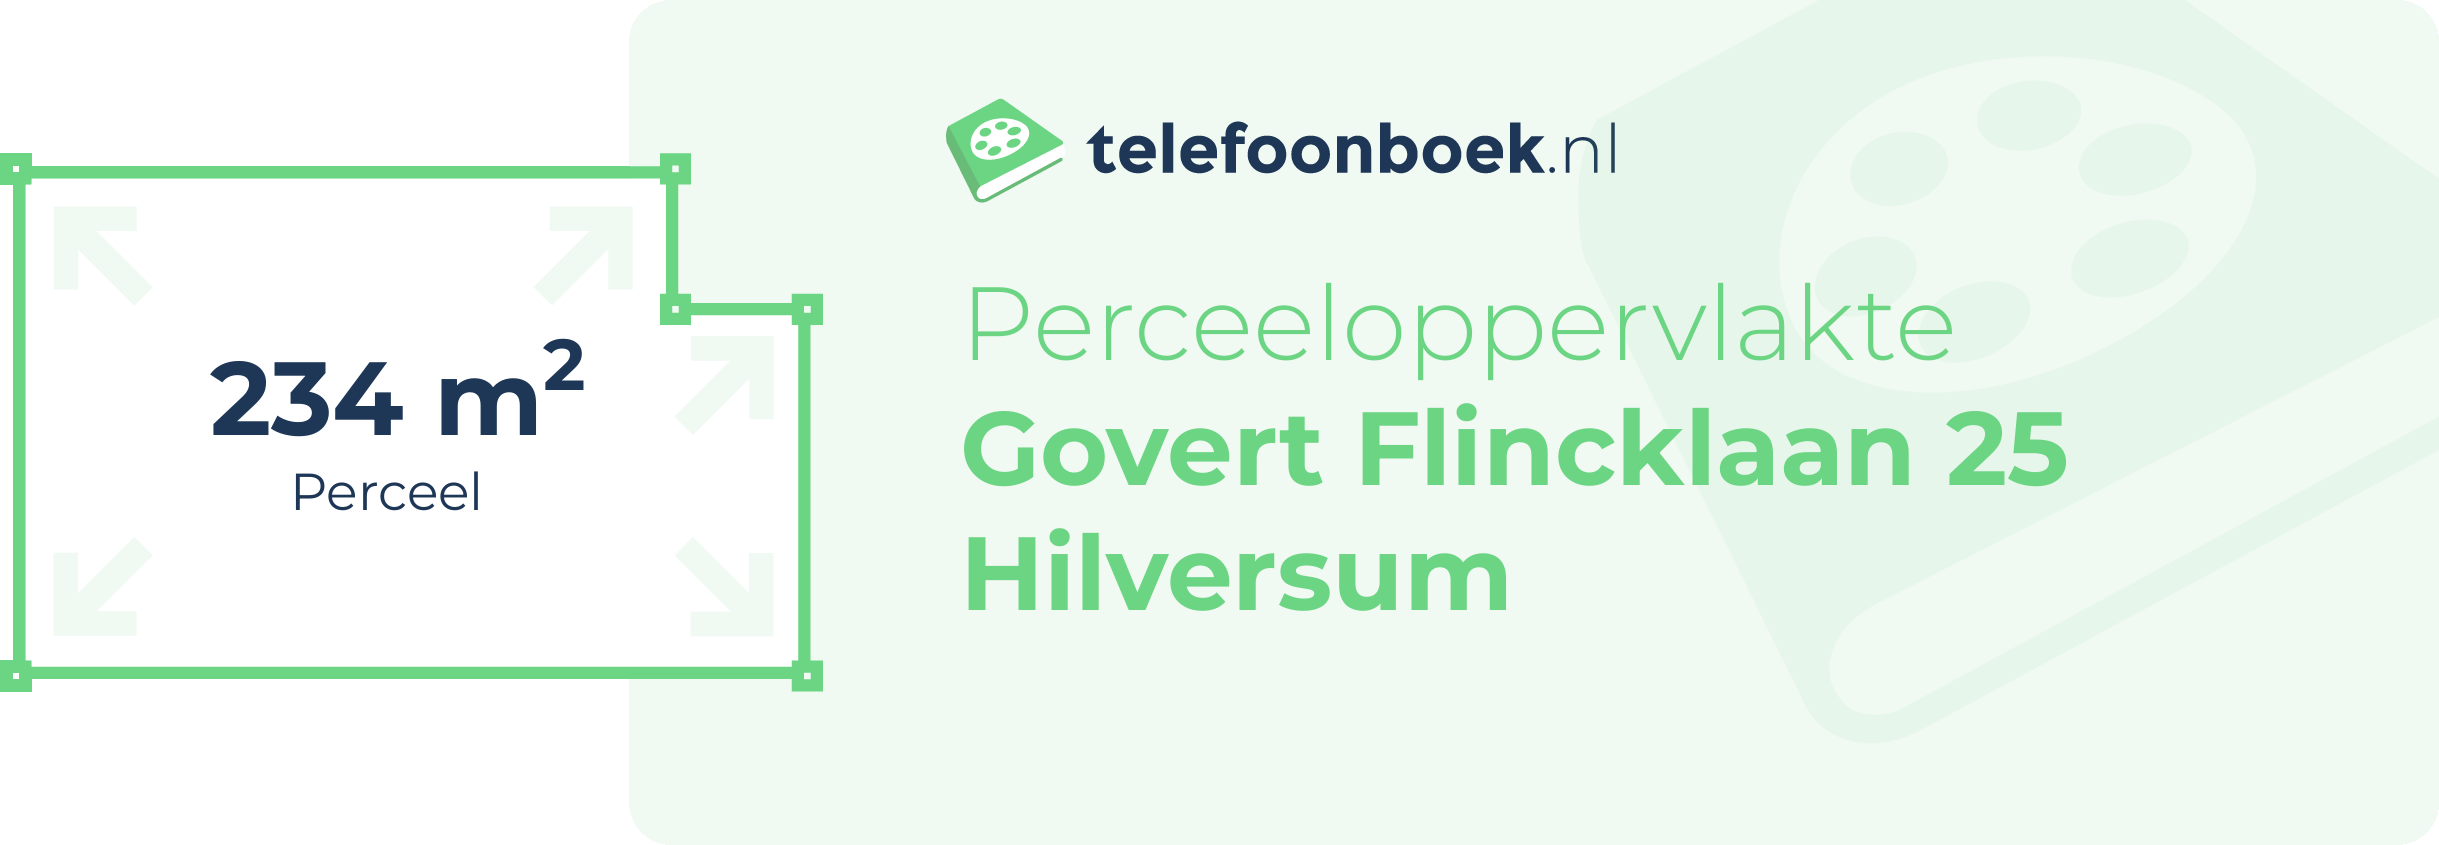 Perceeloppervlakte Govert Flincklaan 25 Hilversum